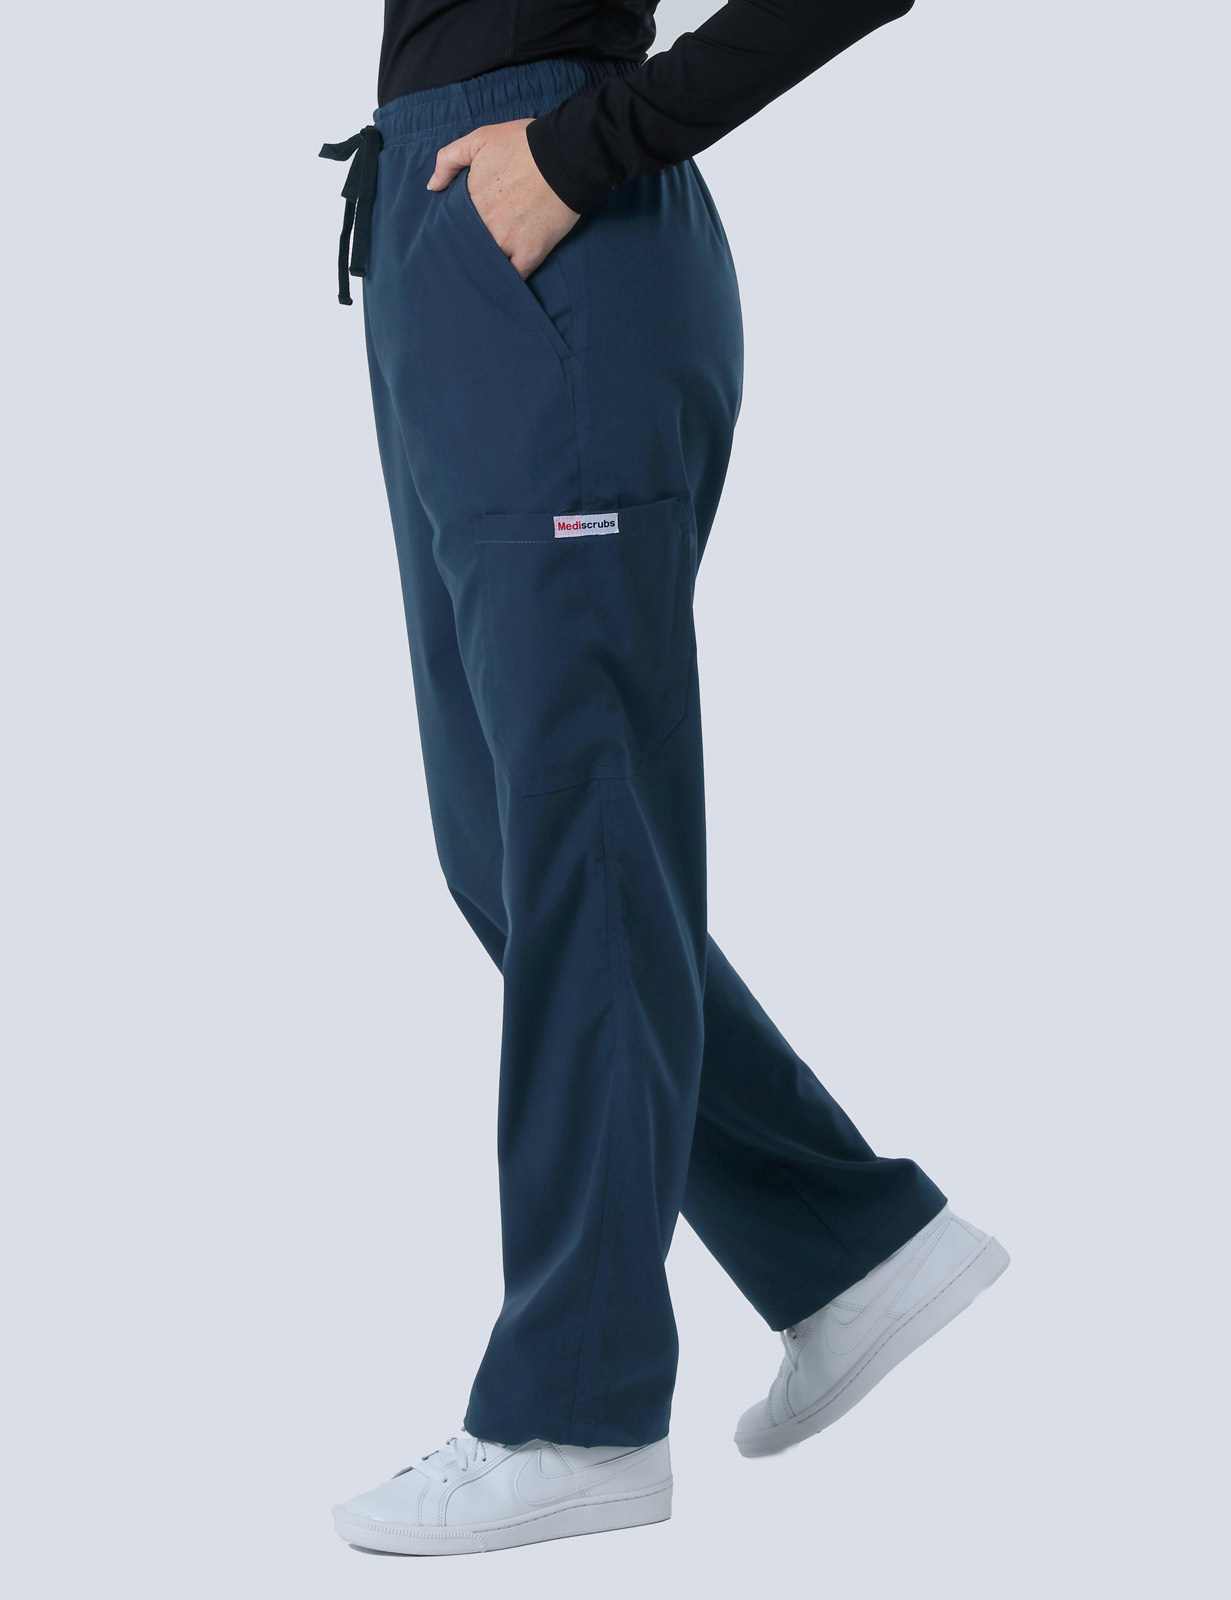 Regional Queensland Enrolled Nurse Uniform Set Bundle (Women's Fit Solid Top and Cargo Pants in Navy incl Logos)